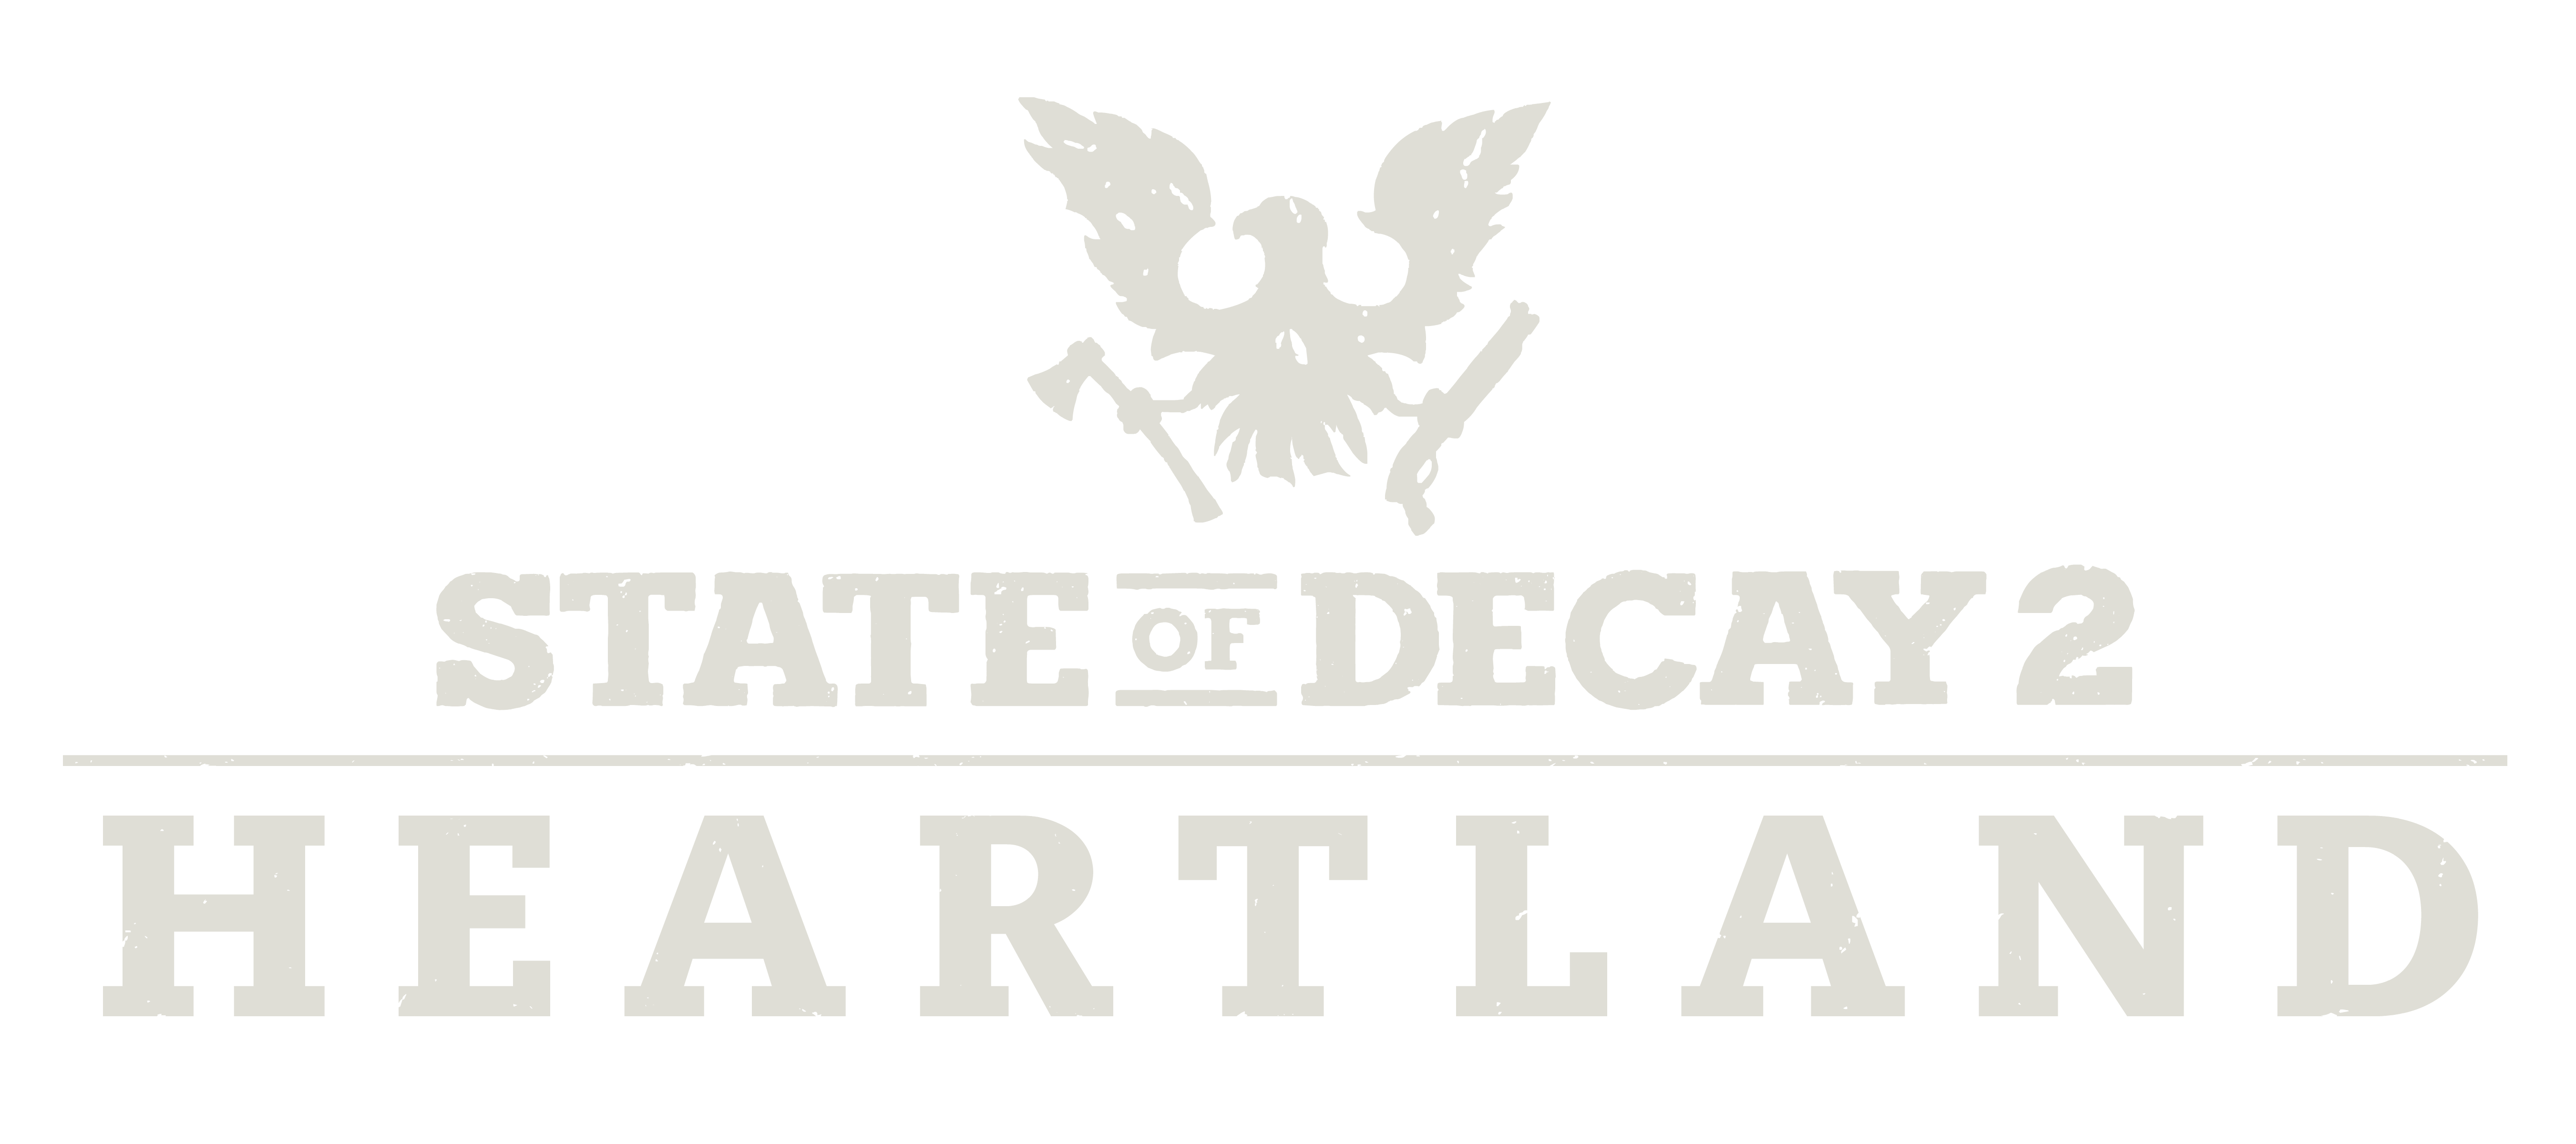 Heartland Logo - E3 2019: State of Decay 2's New Story-Based Adventure, Heartland ...